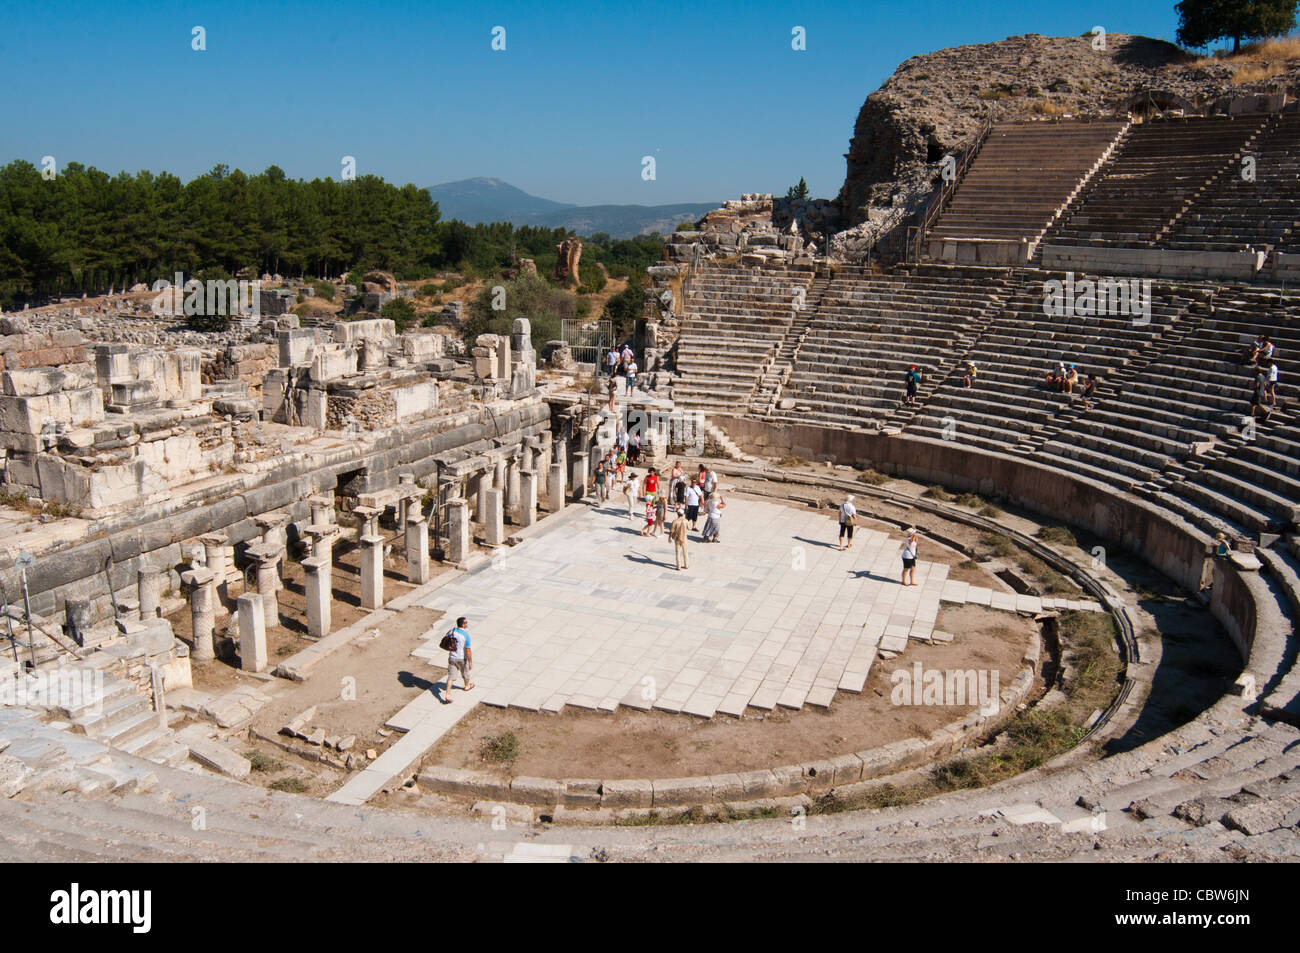 Grand Theatre - the Amphitheatre of Ephesus - ancient city near Selcuk Turkey. Stock Photo